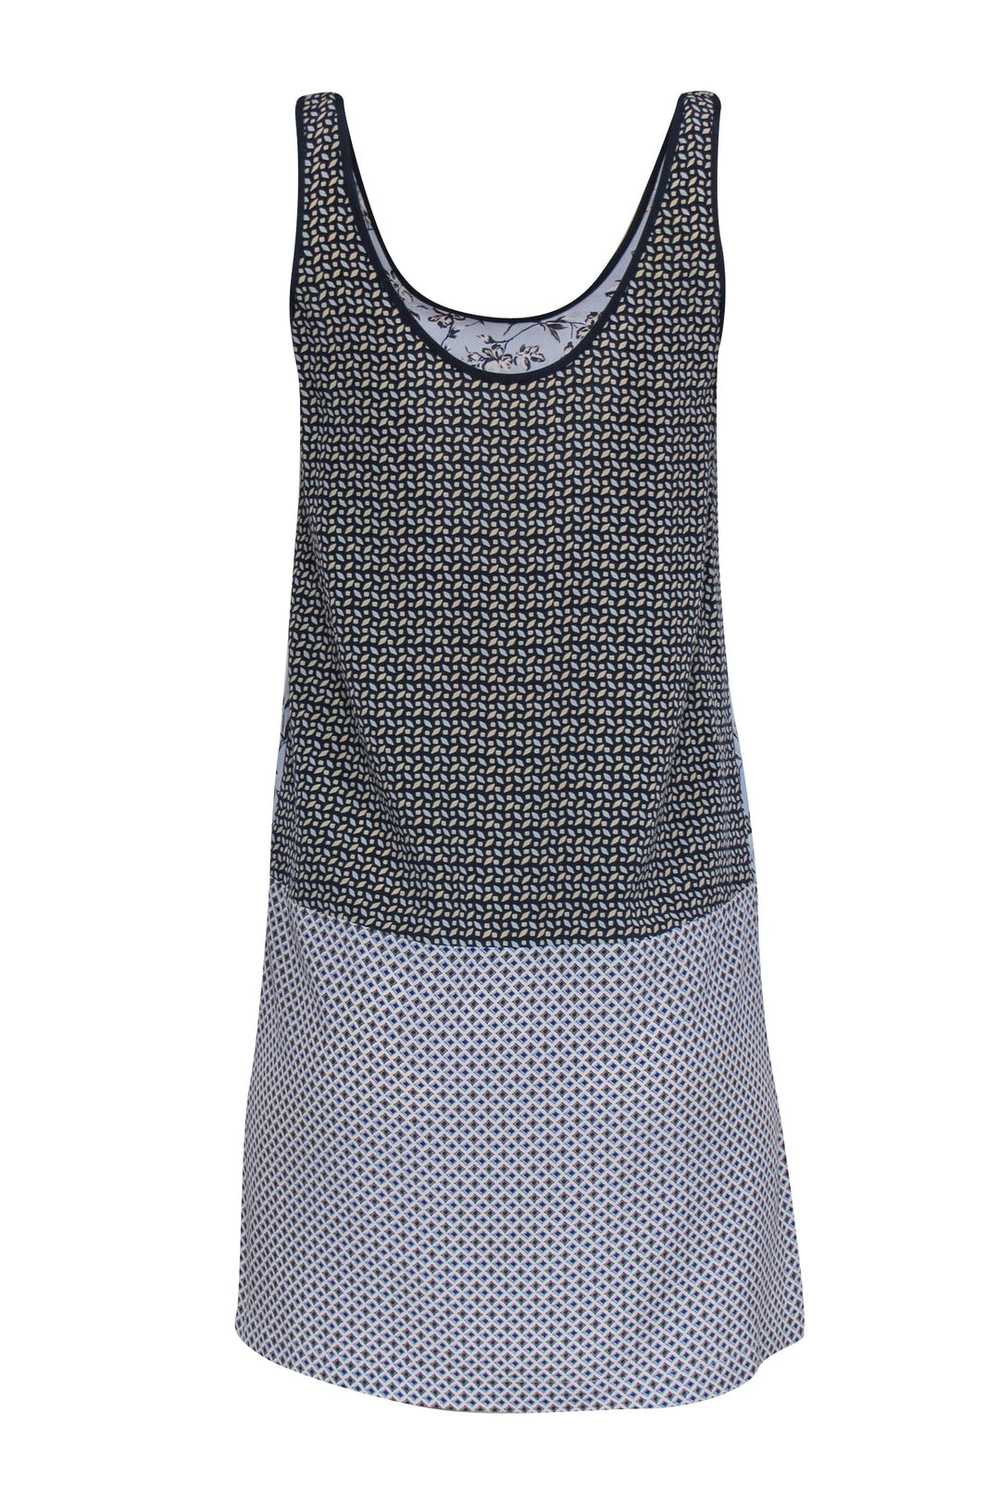 Joie - Blue Multi-Print Silk Shift Dress Sz XS - image 3